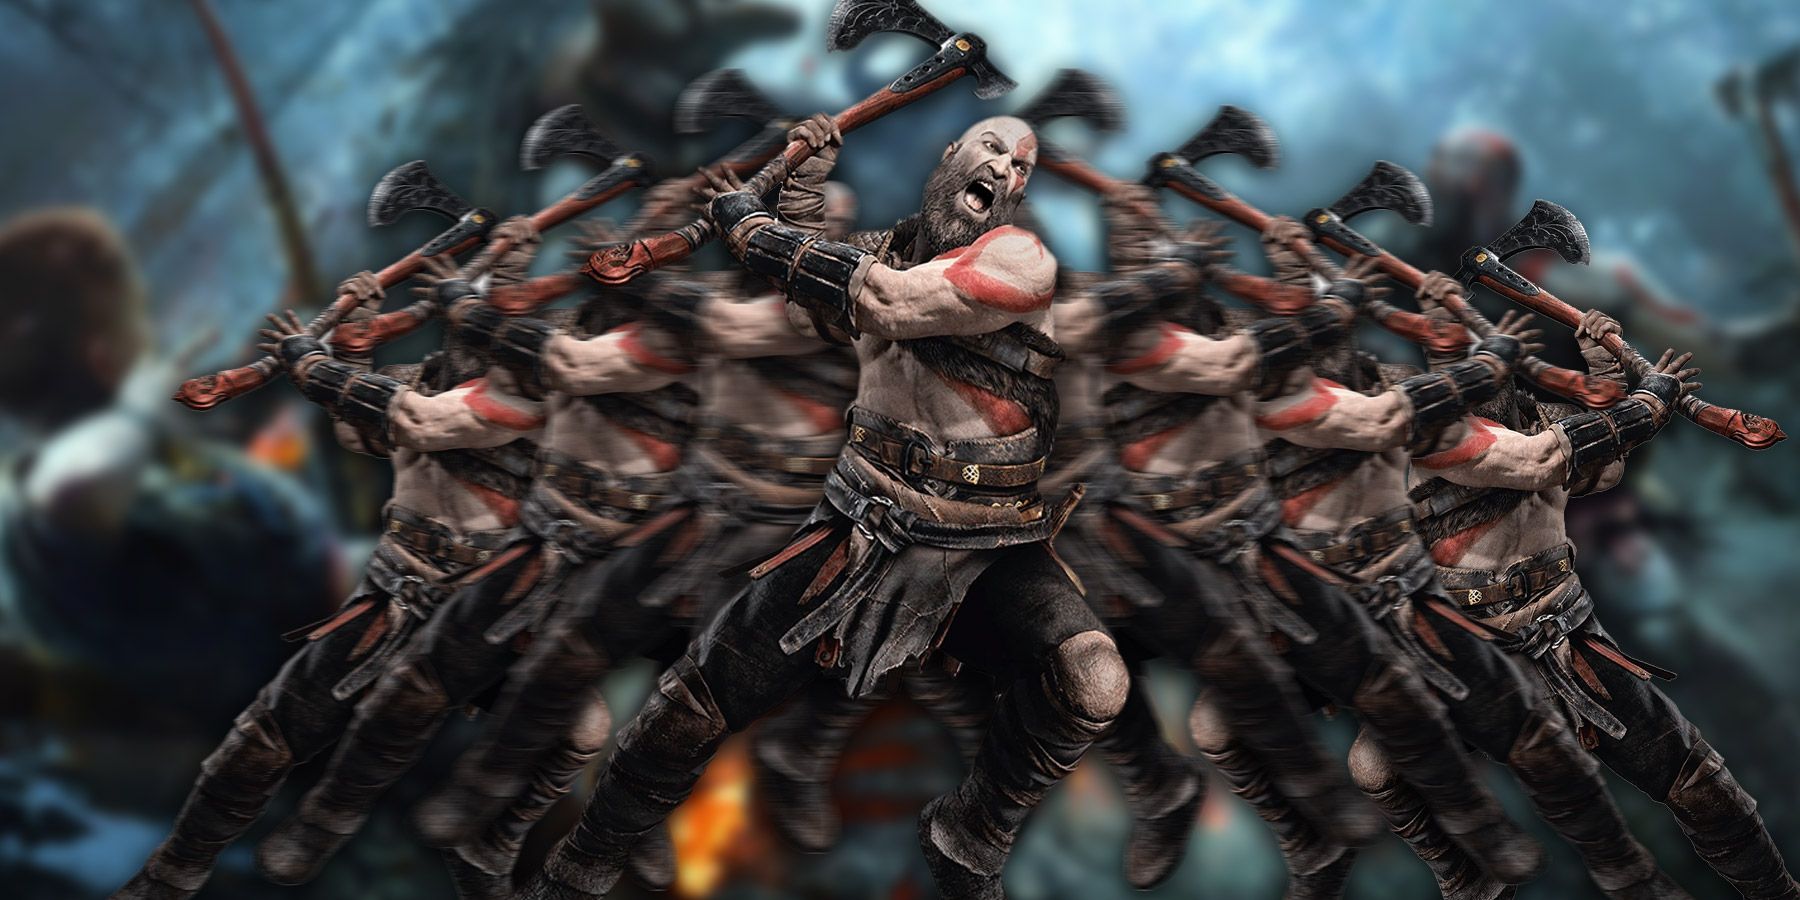 God of War: Ragnarok Rowing Animation Criticism Receives Backlash